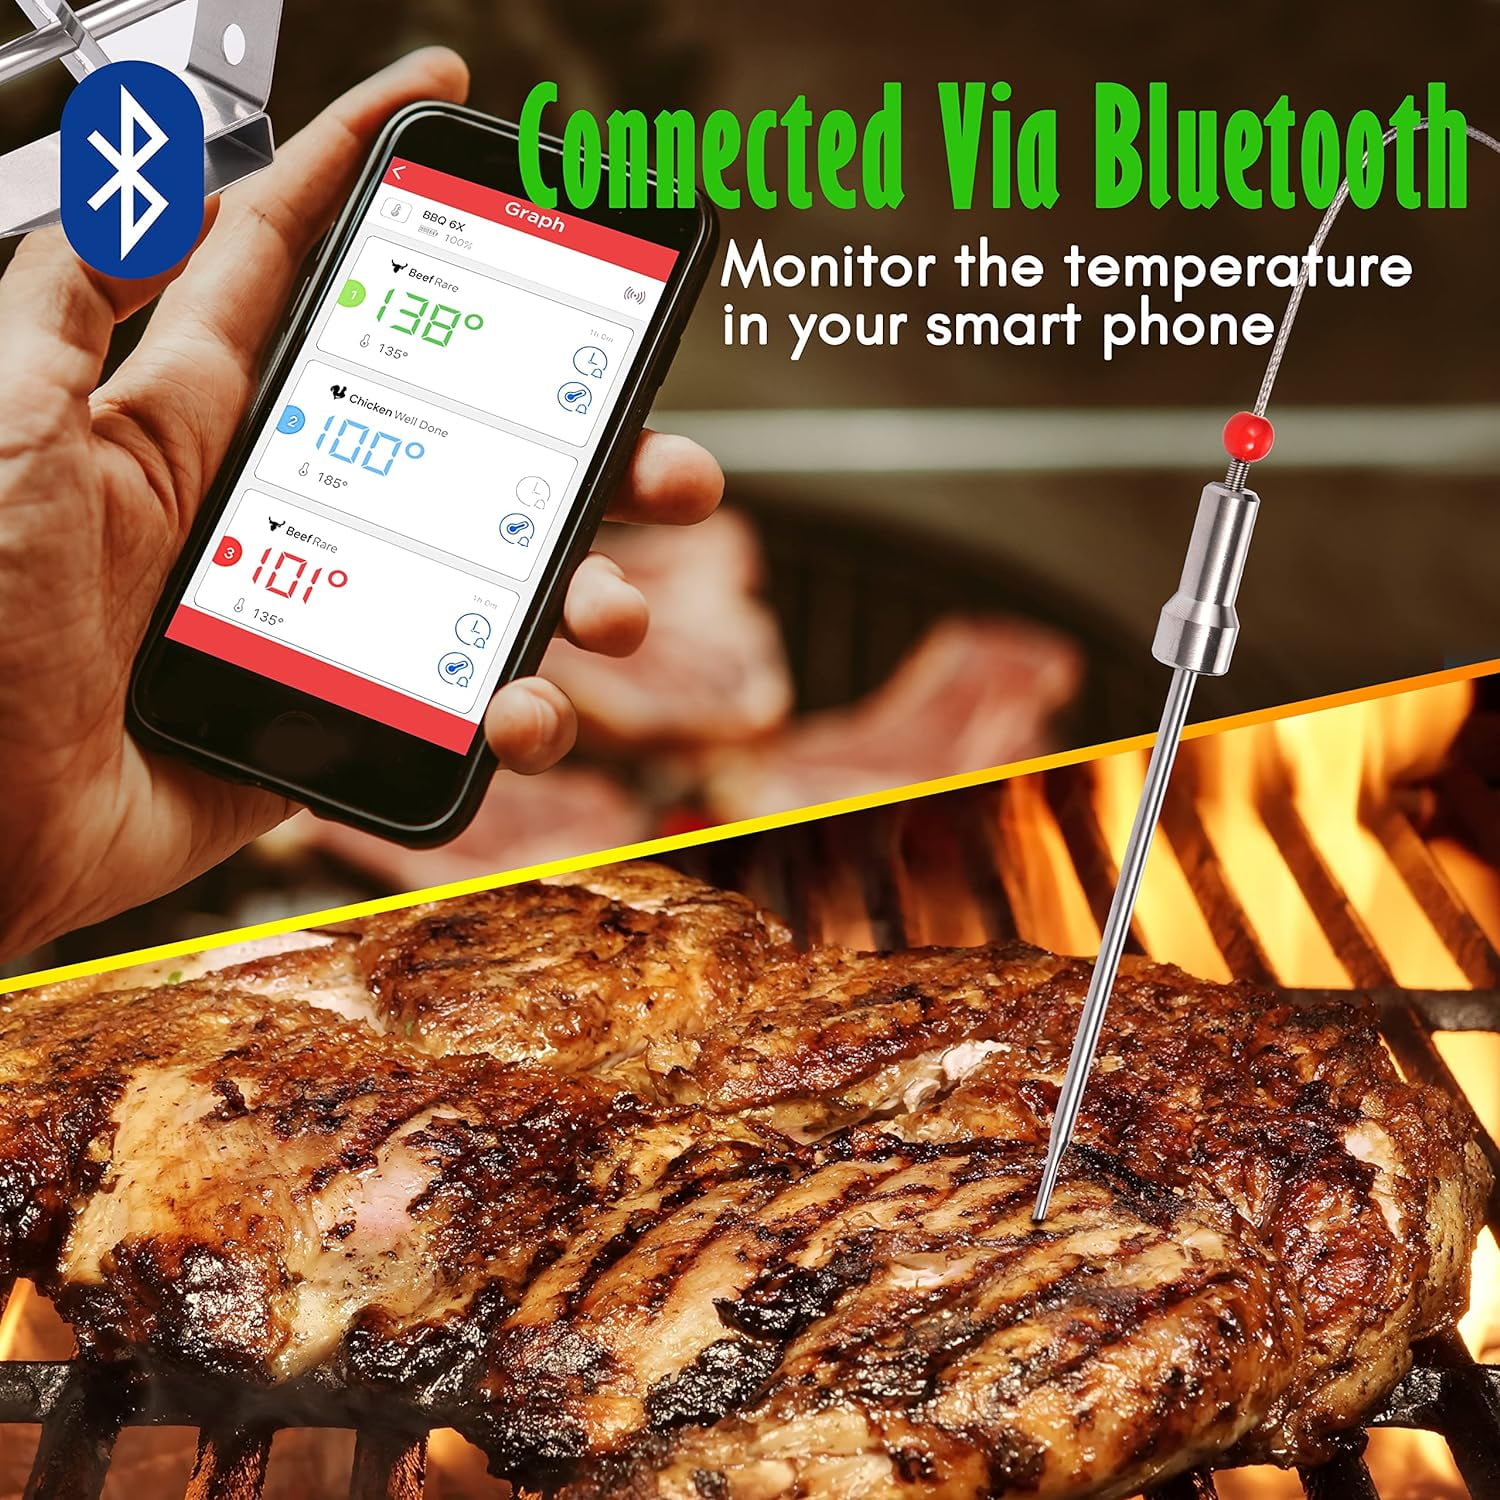 Nutrichef Pwirbbq80 Smart Bluetooth BBQ Grill Thermometer